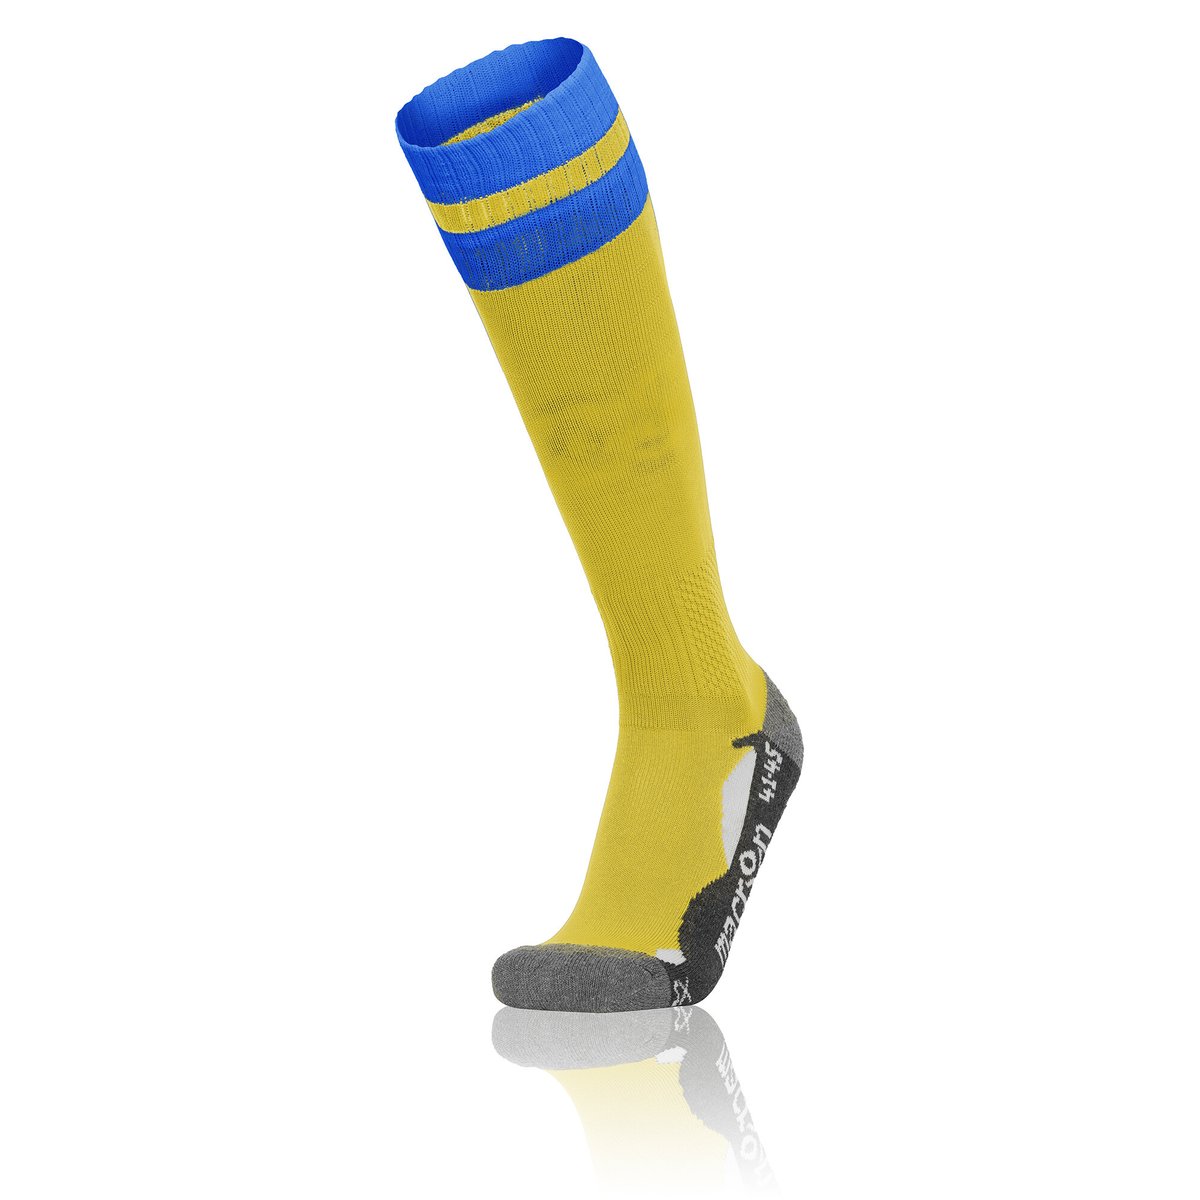 Macron Azlon Match Sock - Yellow/Royal Blue (Pack of 5)